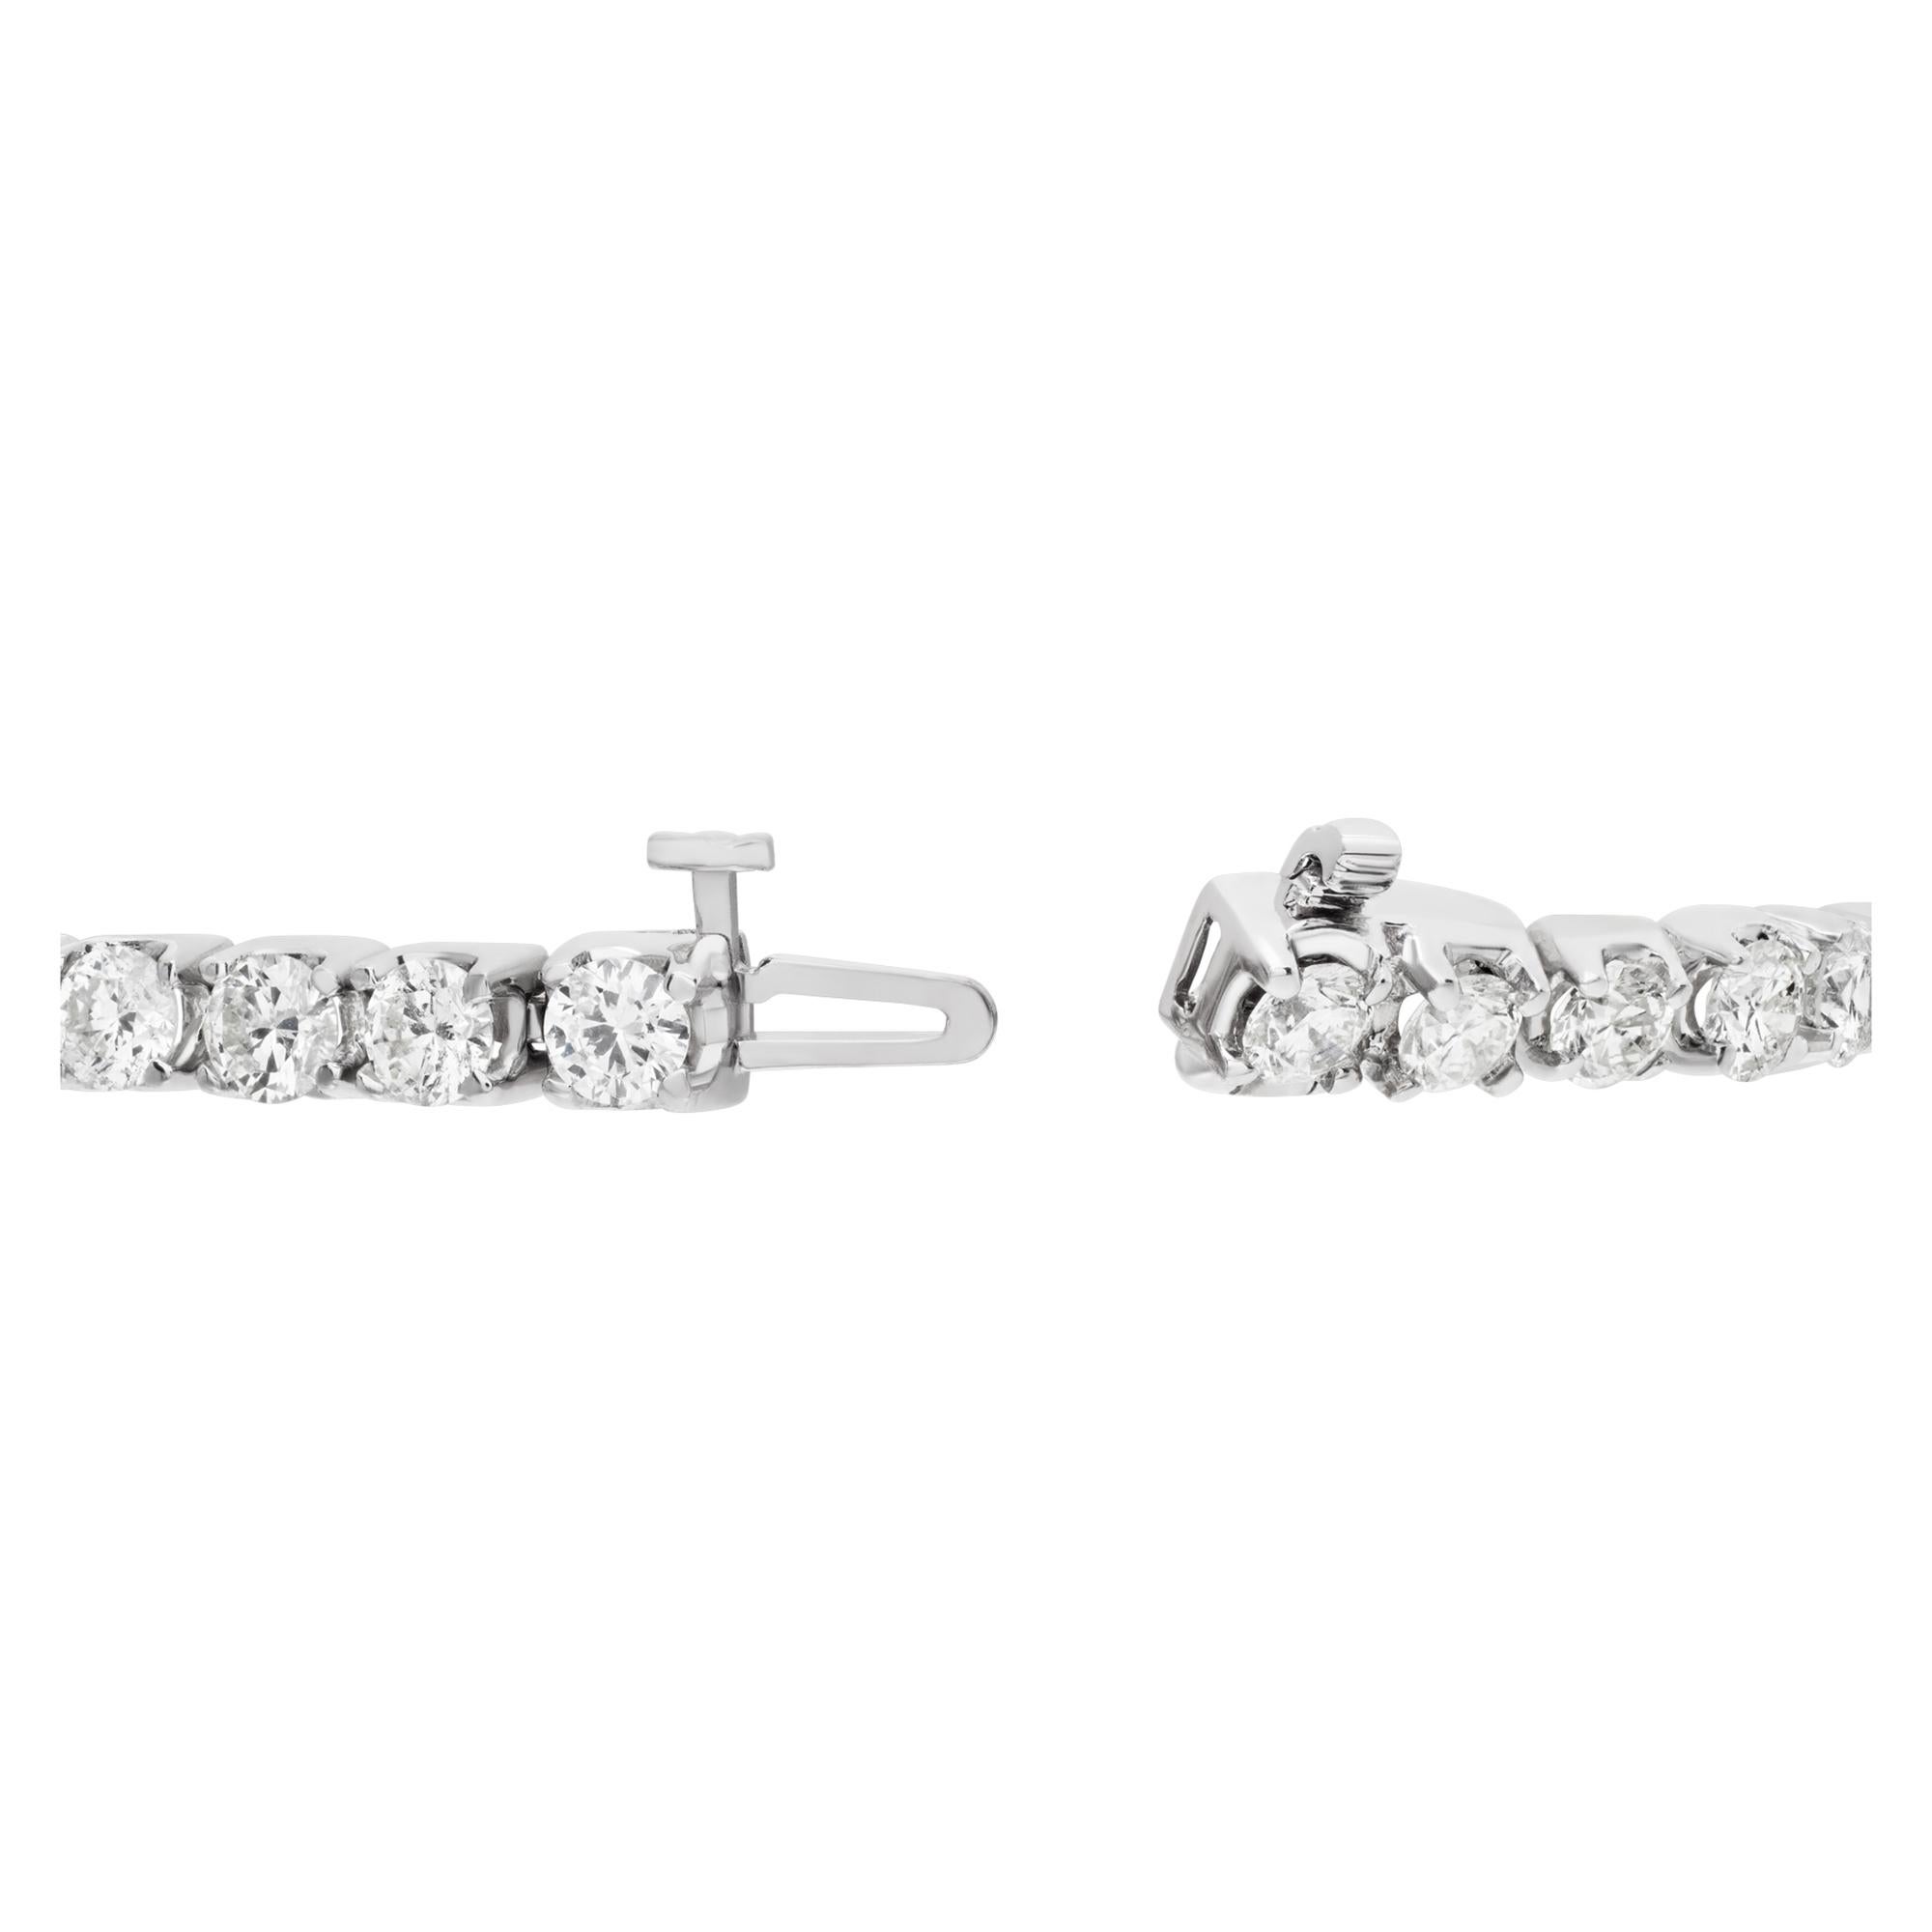 Women's Line Diamond Bracelet with 8.09 Carat Full Cut Round Diamonds Set For Sale